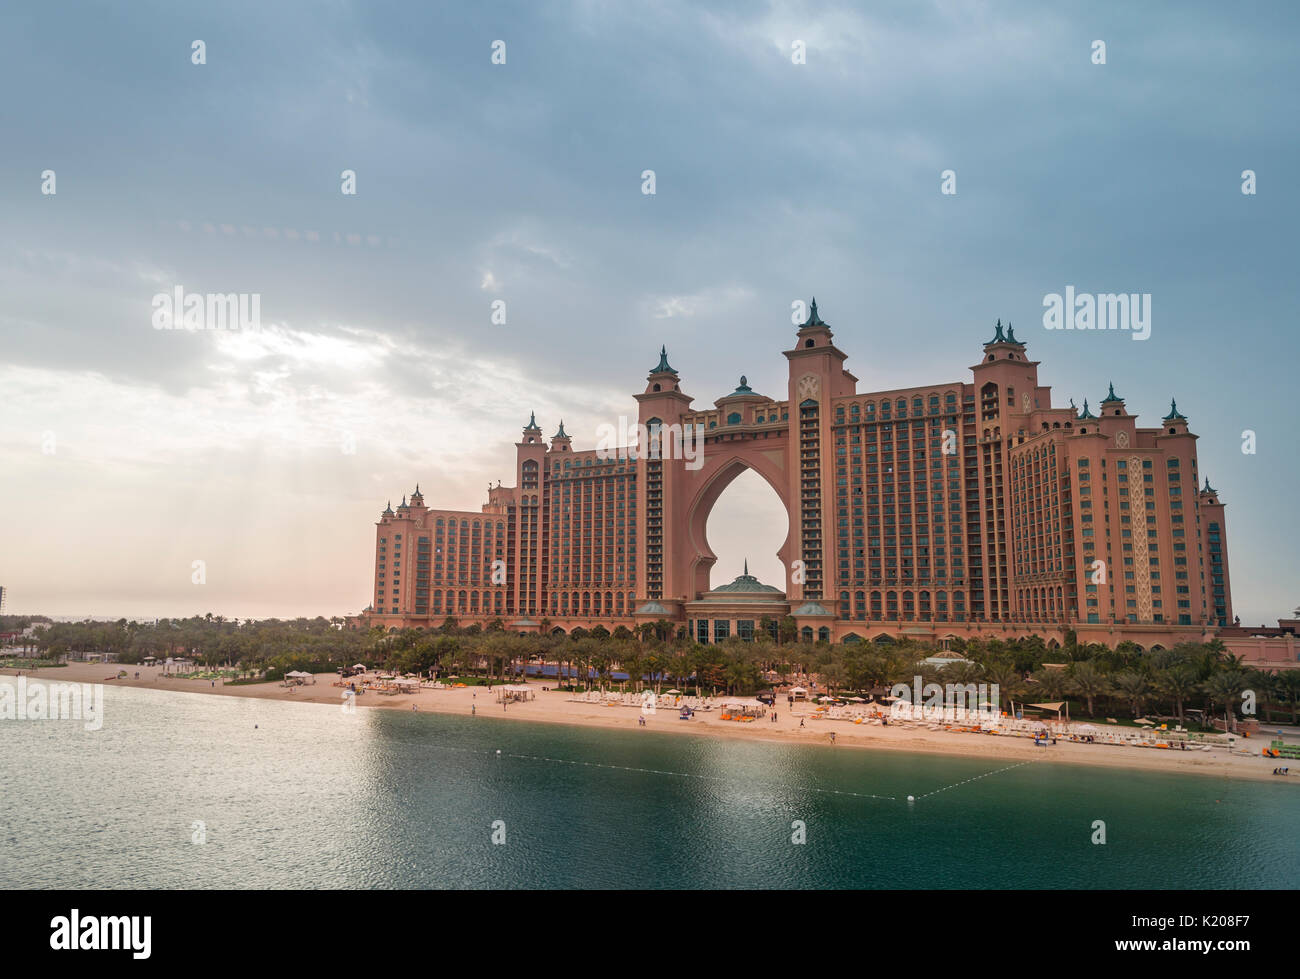 Hotel Atlantis The Palm, Palm Jumeirah, Dubai, United Arab Emirates Stock Photo